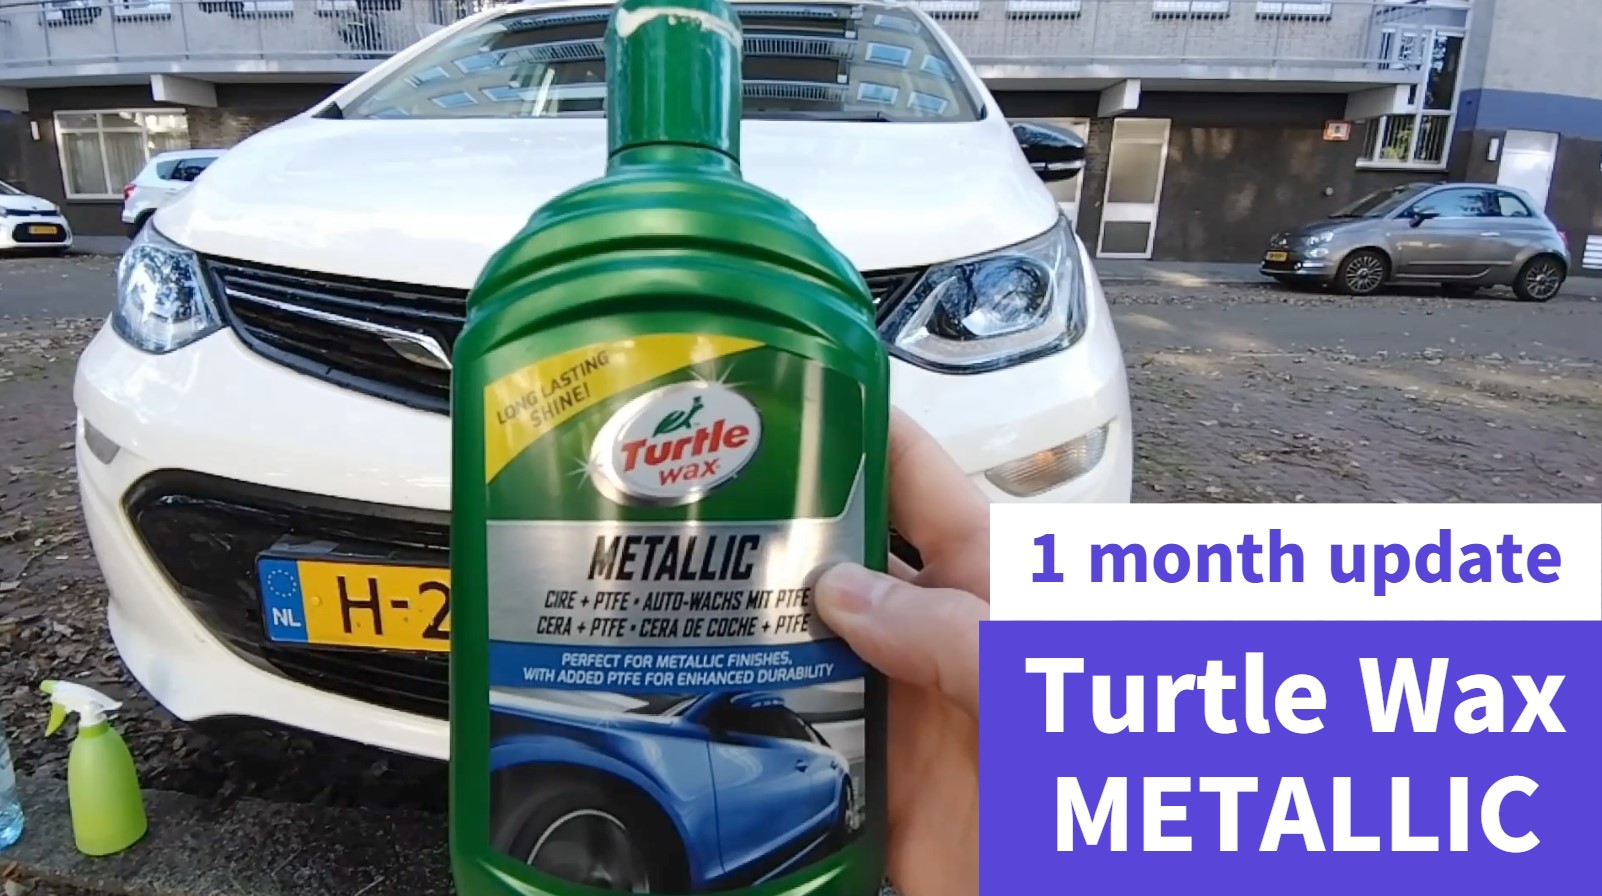 Turtle Wax PTFE Metallic 1 month update video